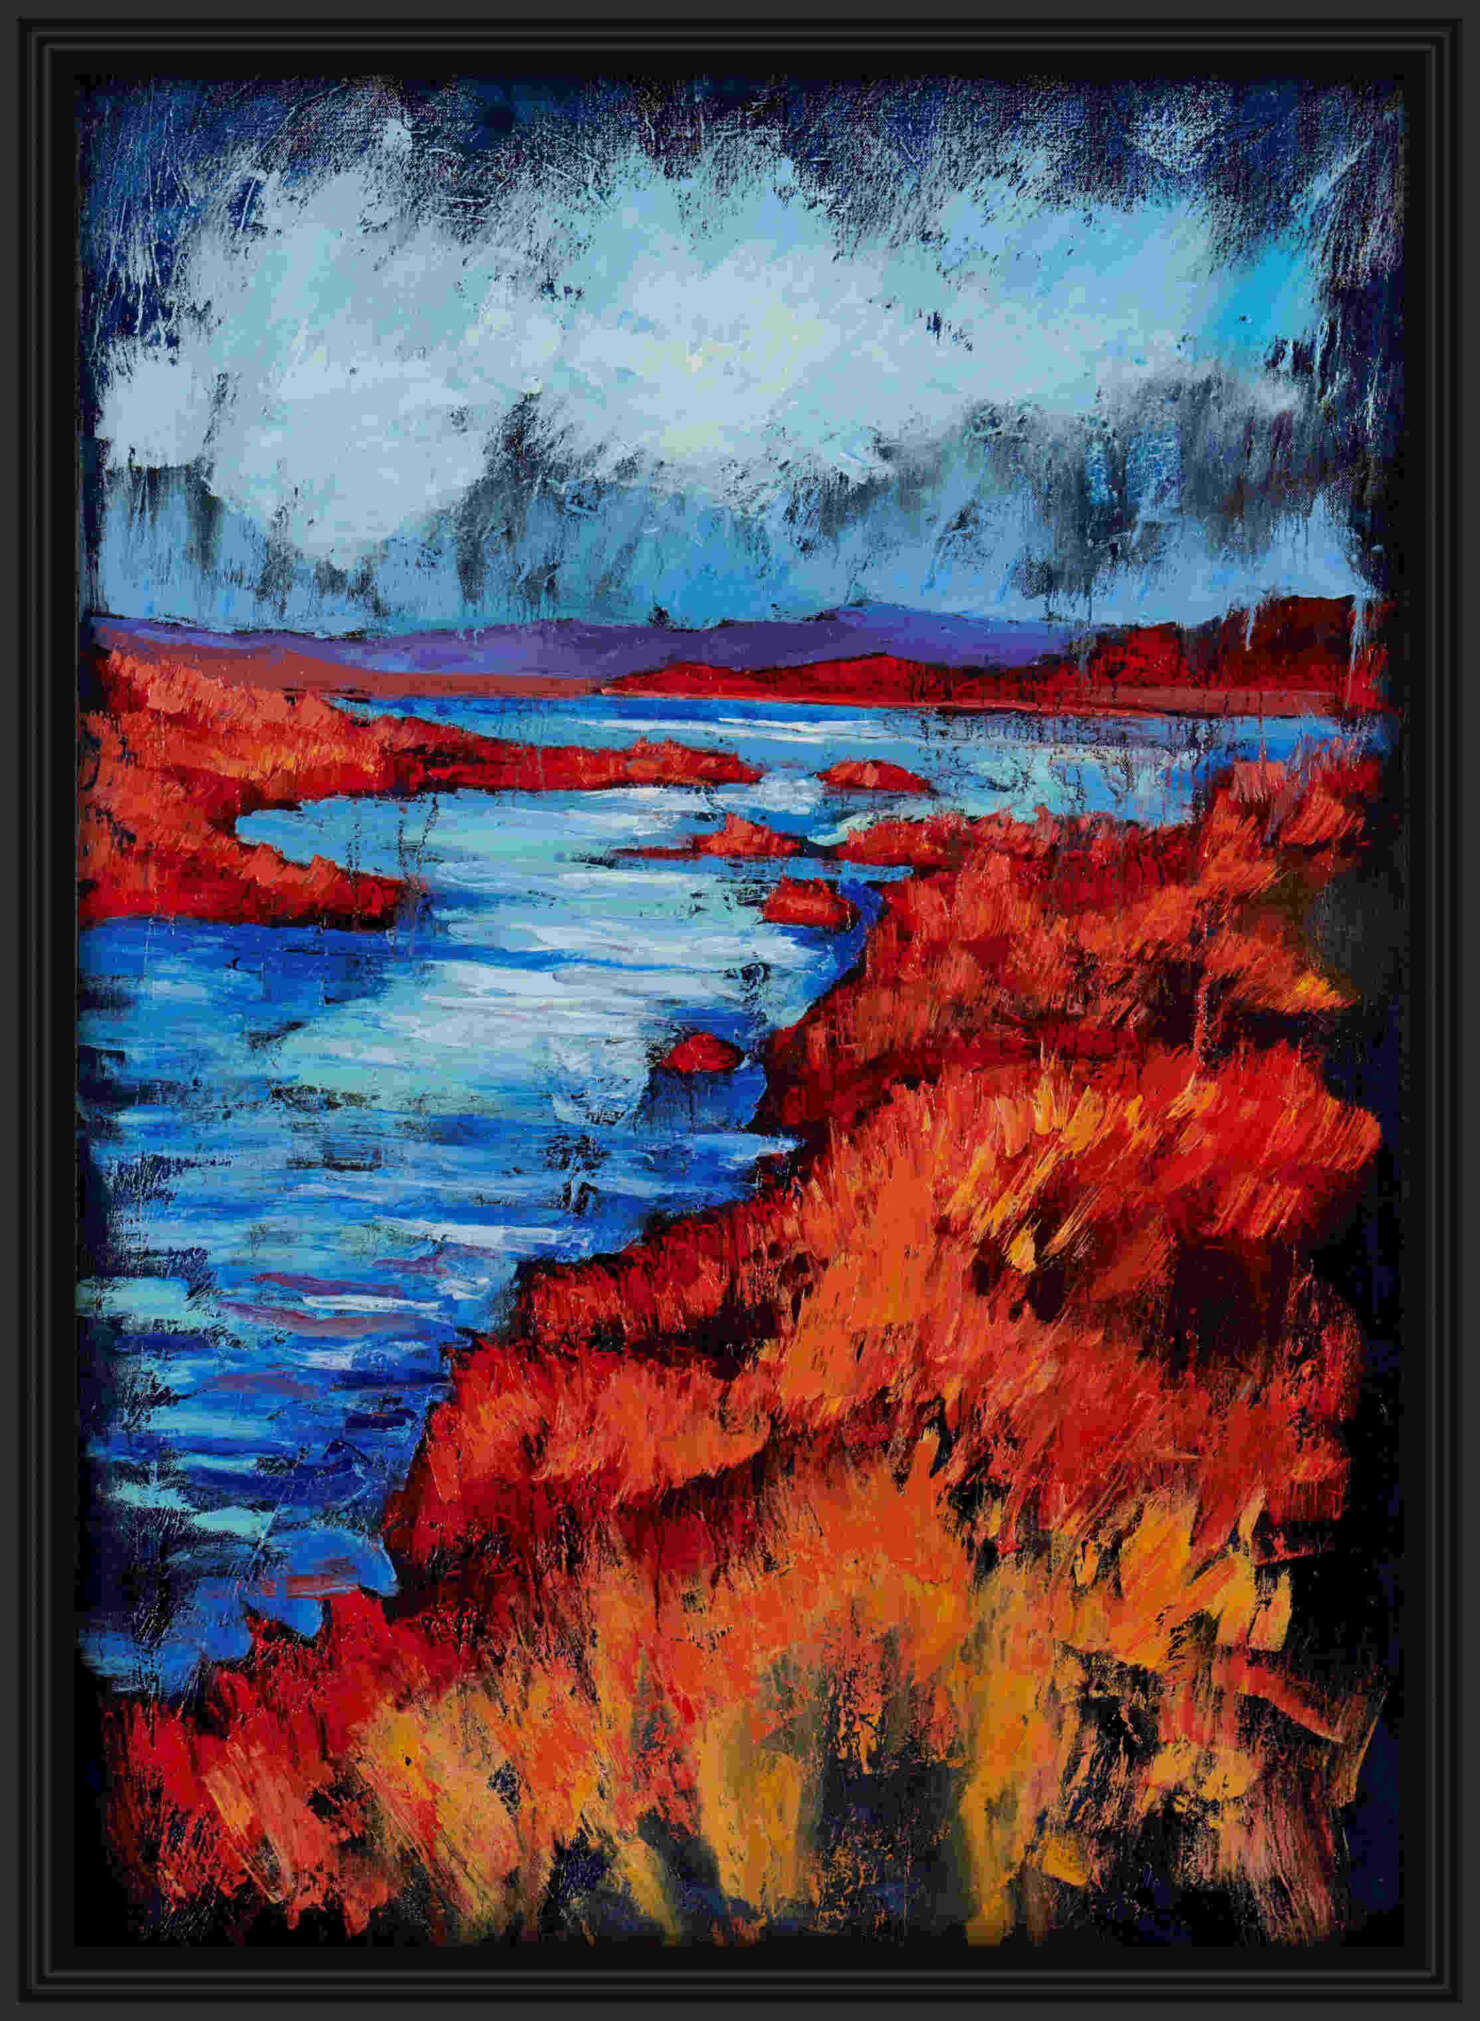 artist rod coyne's landscape "Ardcost Estuary" is shown here in a black frame.